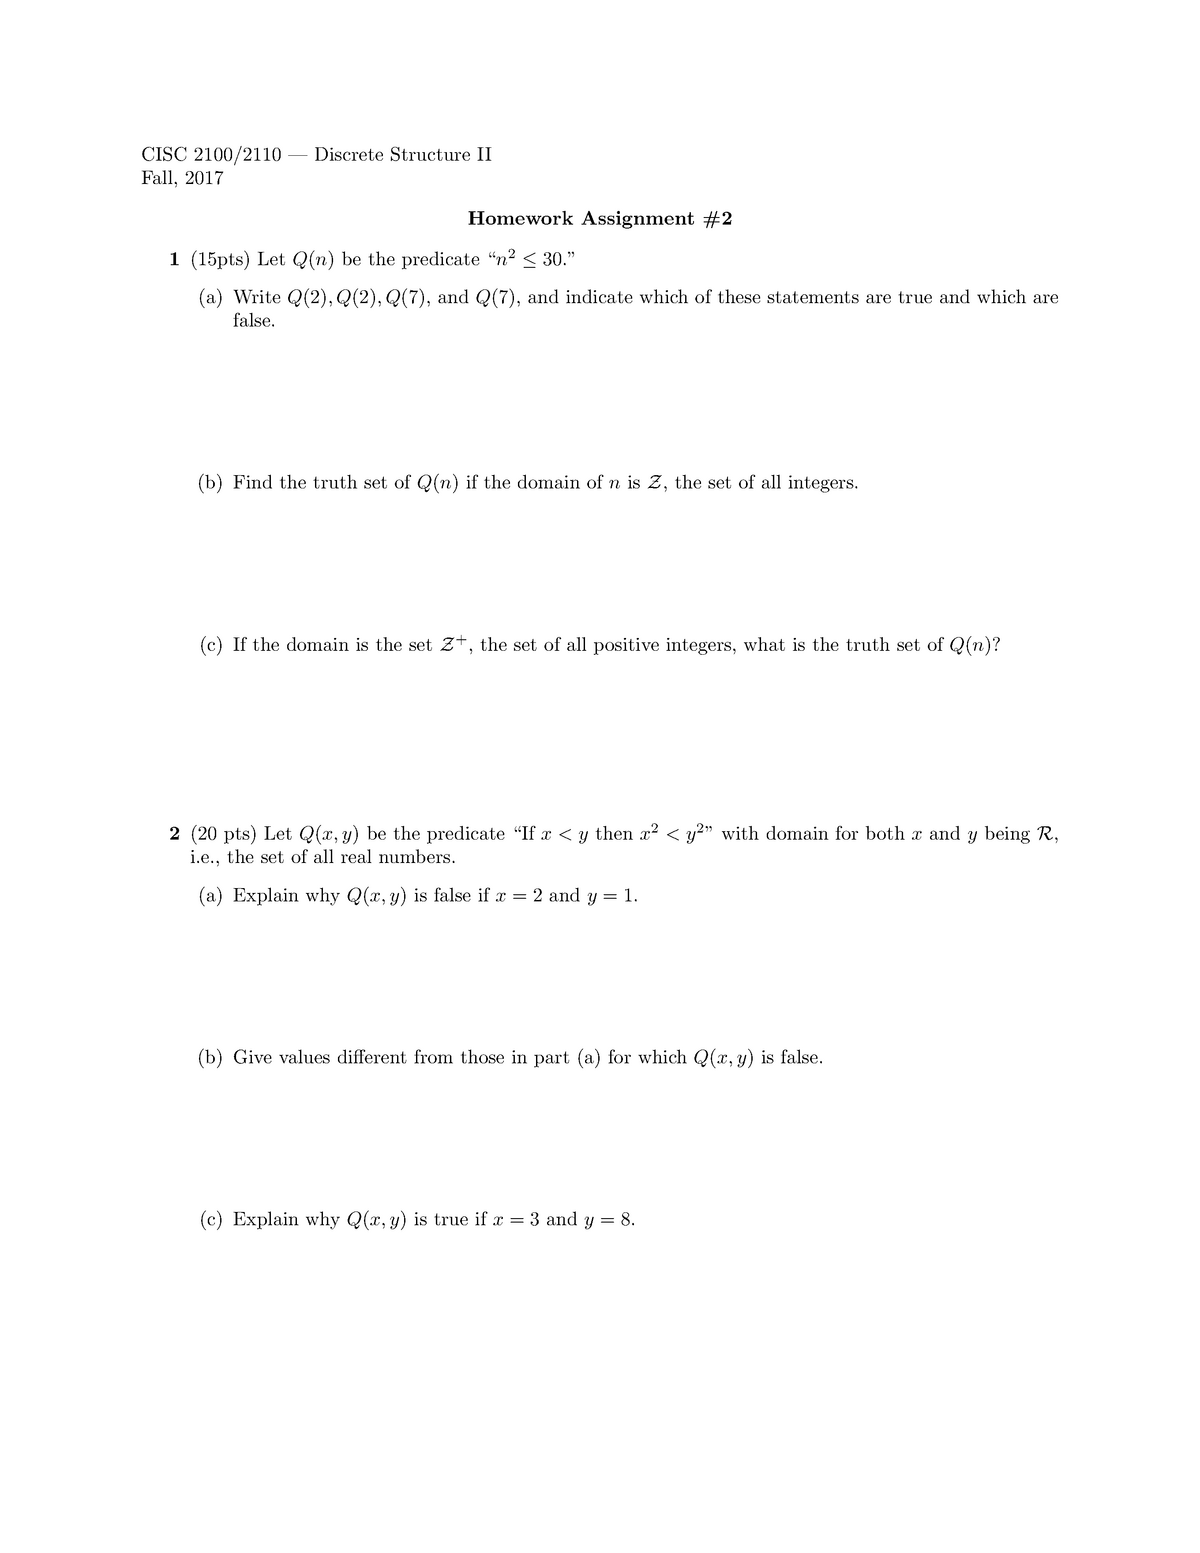 Homework Assignment 2 Cisc 2100 2110 Discrete Structure Ii Fall 17 Homework Assignment 1 Studocu